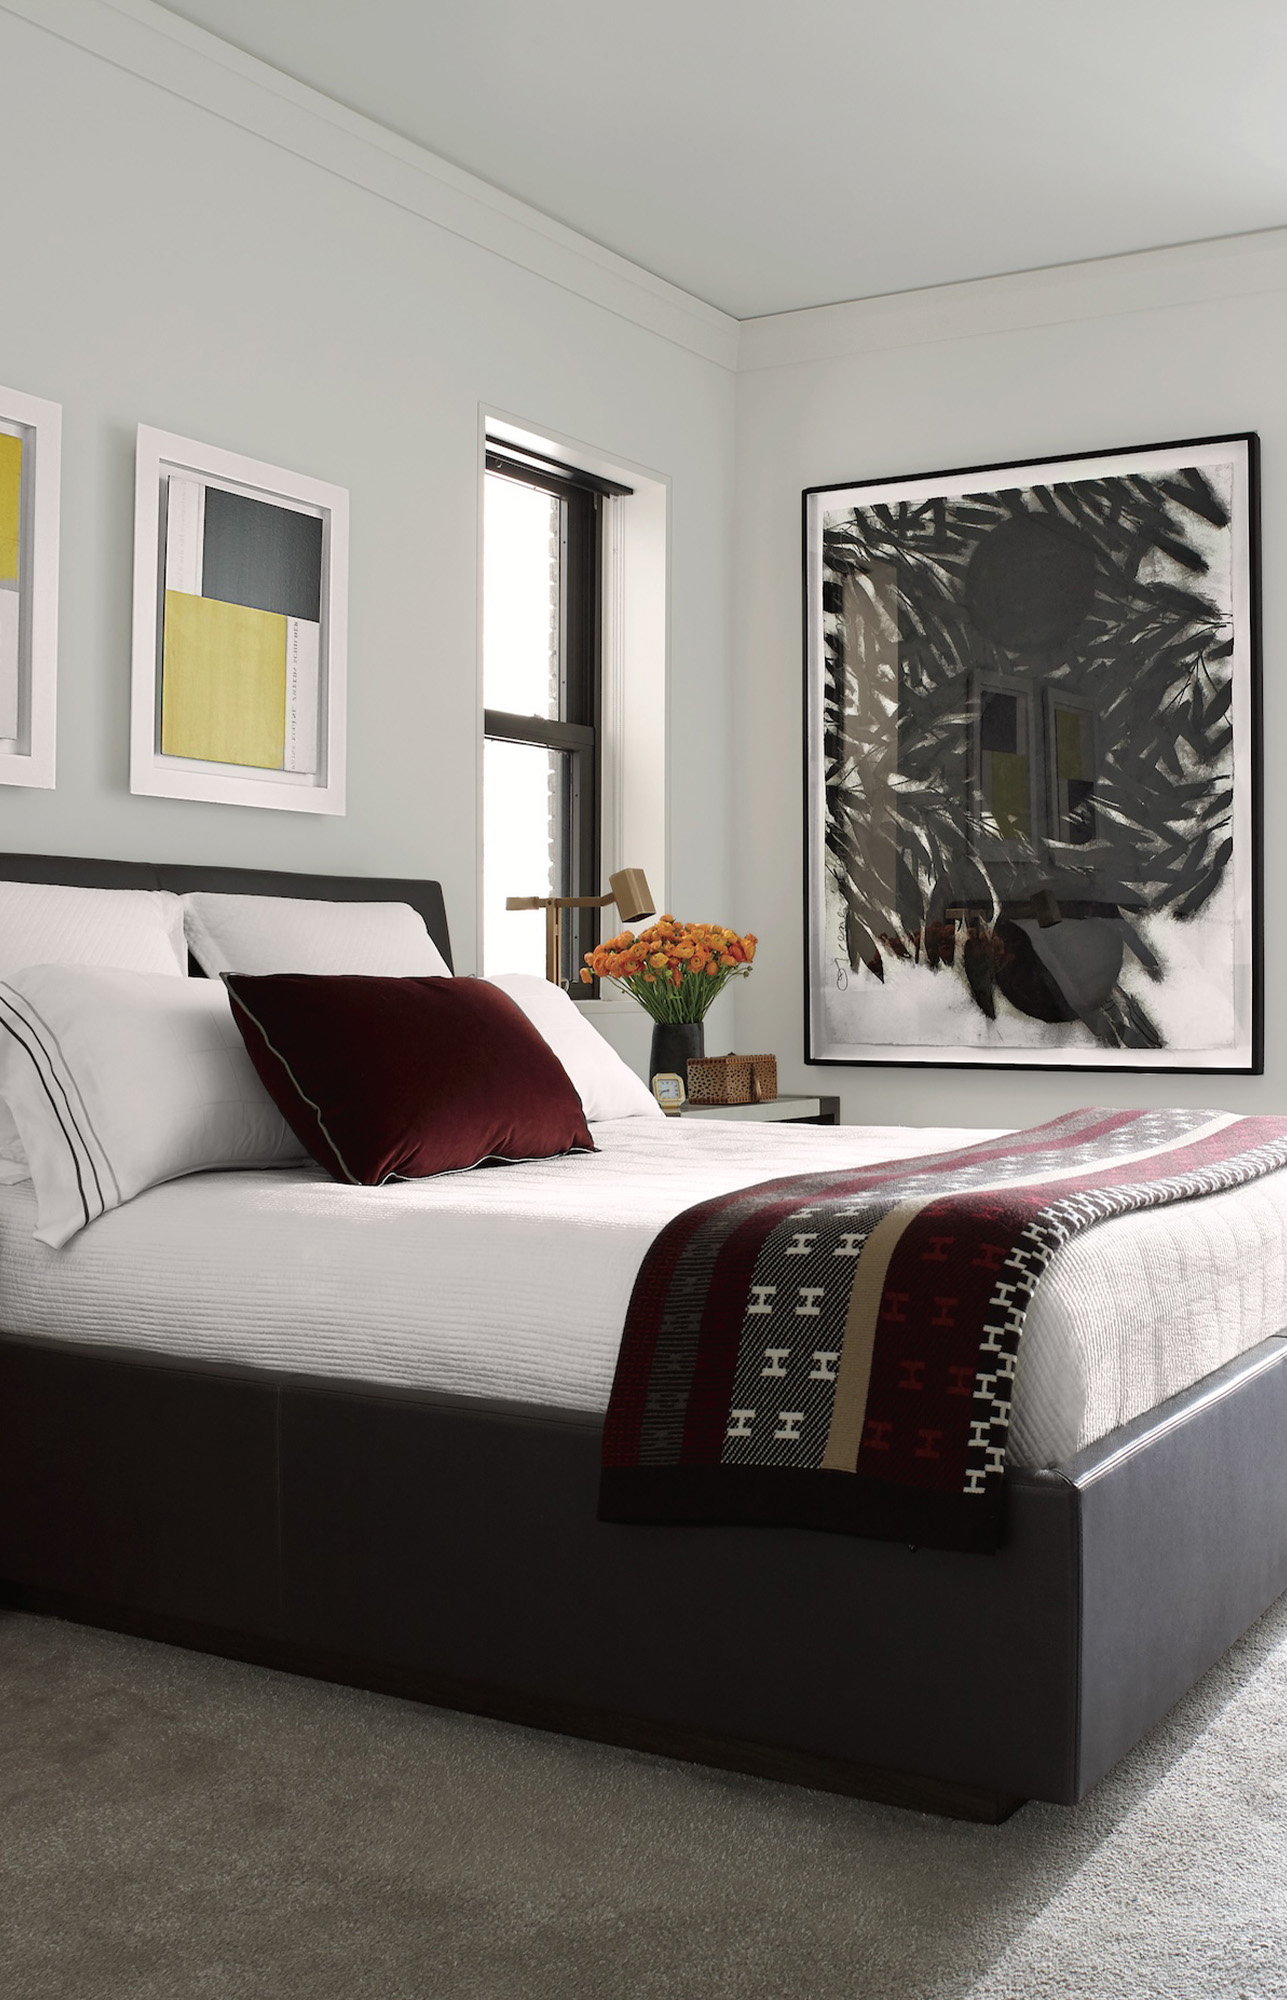 House-of-Hunt-Interior-Design-Chicago-Master-Bedroom-Large-Wall-Art-Mobile